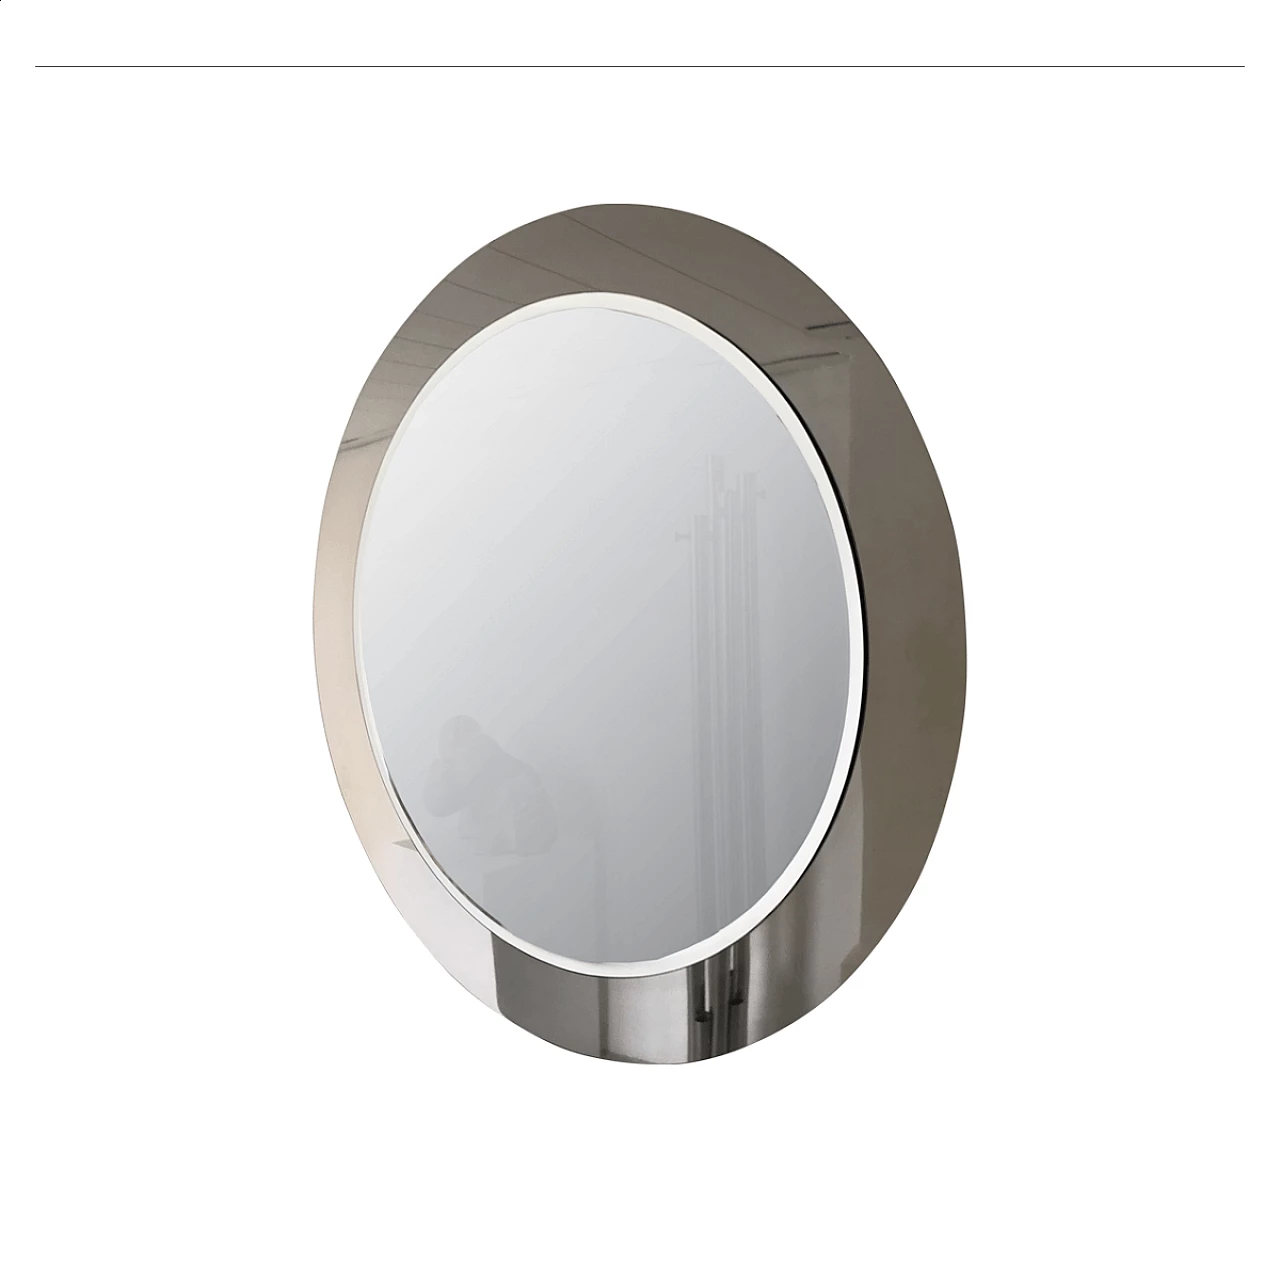 Circular mirror with metal frame, 1960s 1060298